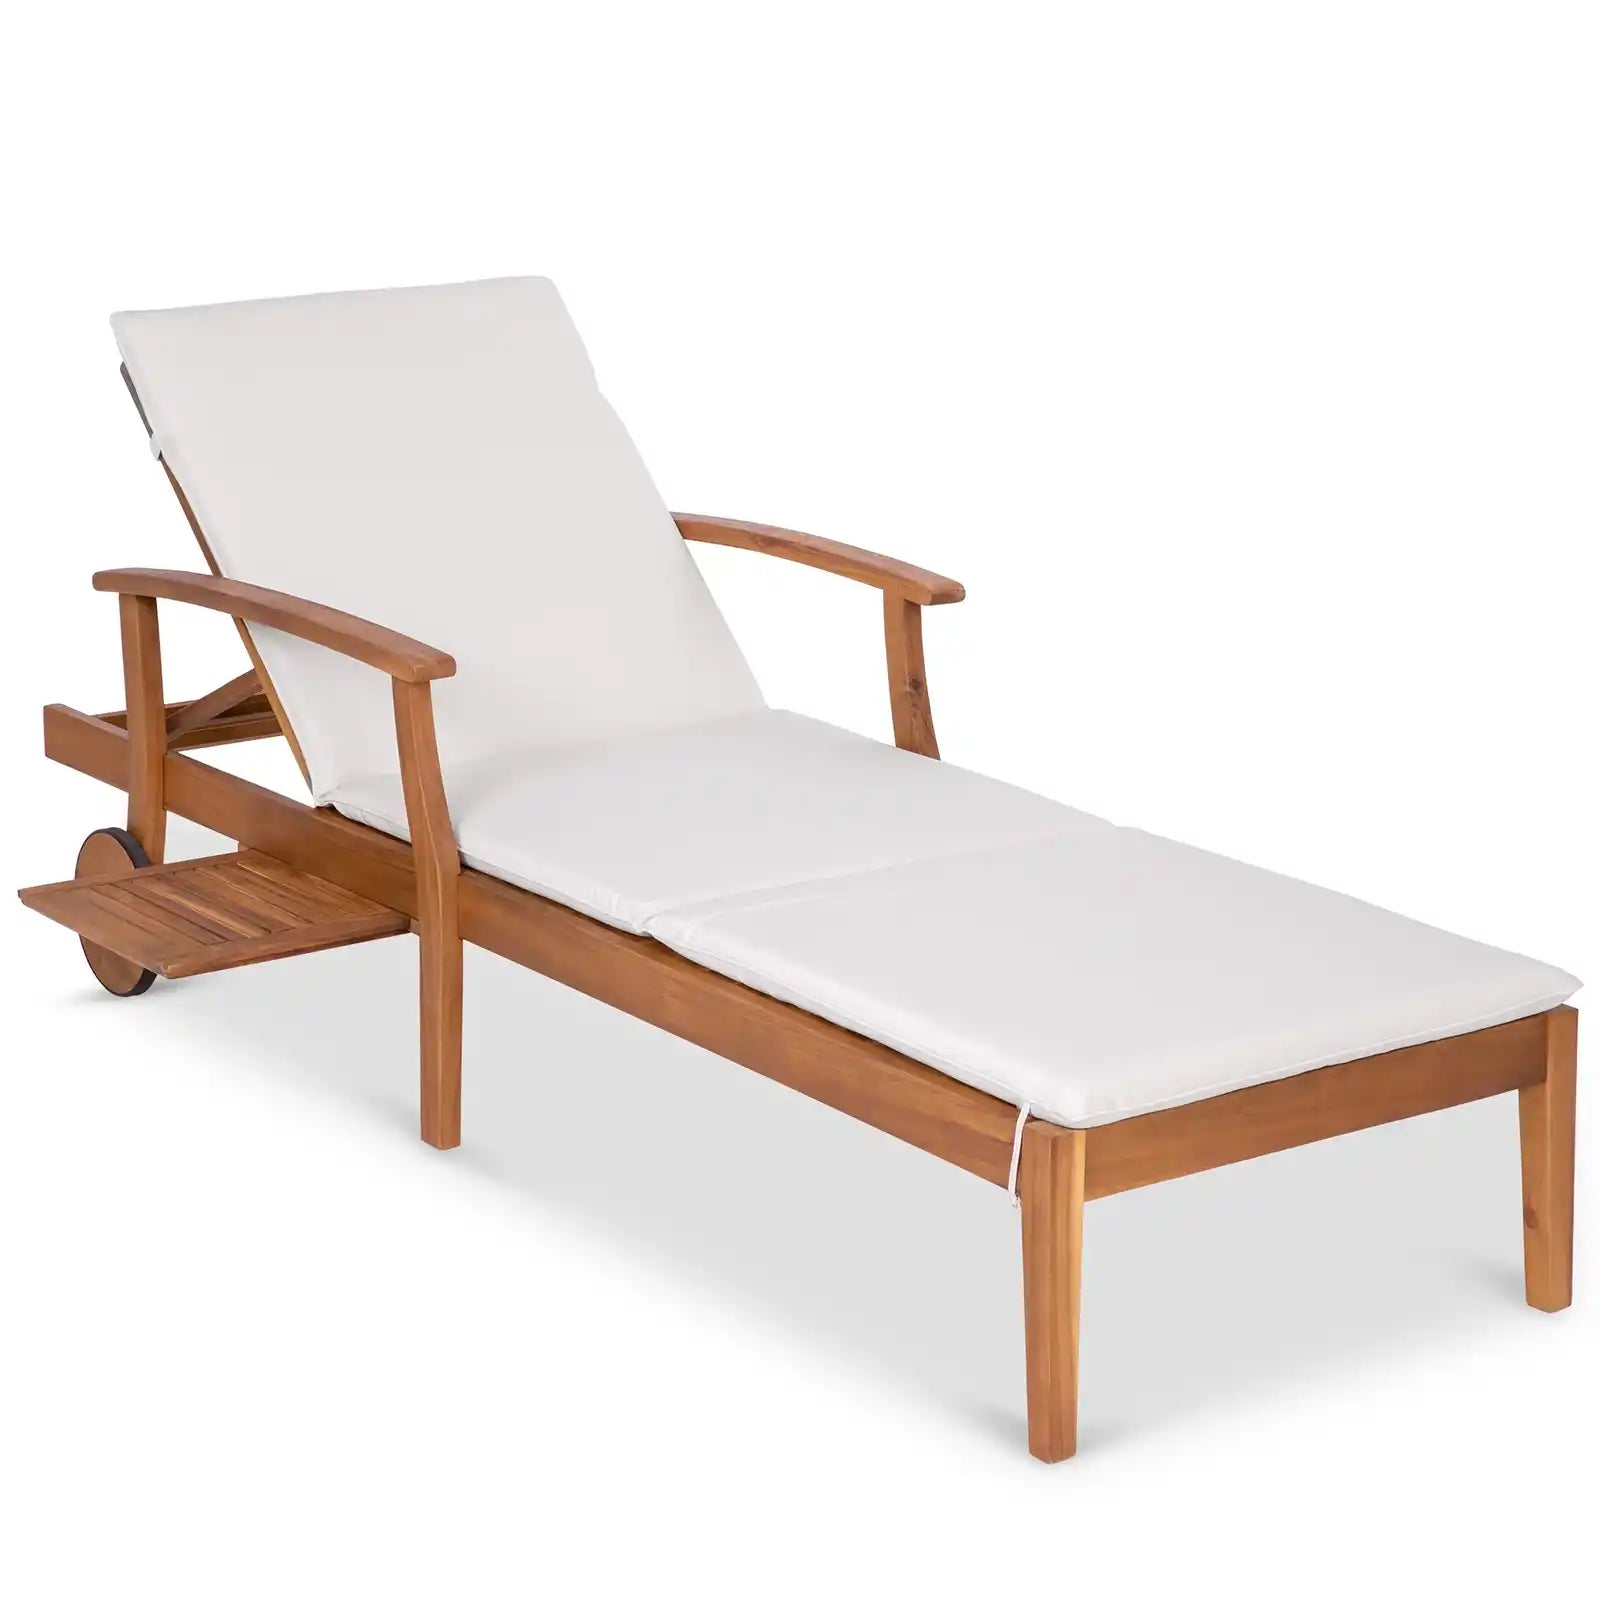 Chaise Lounge de madera de acacia para exteriores con respaldo ajustable, mesa y ruedas